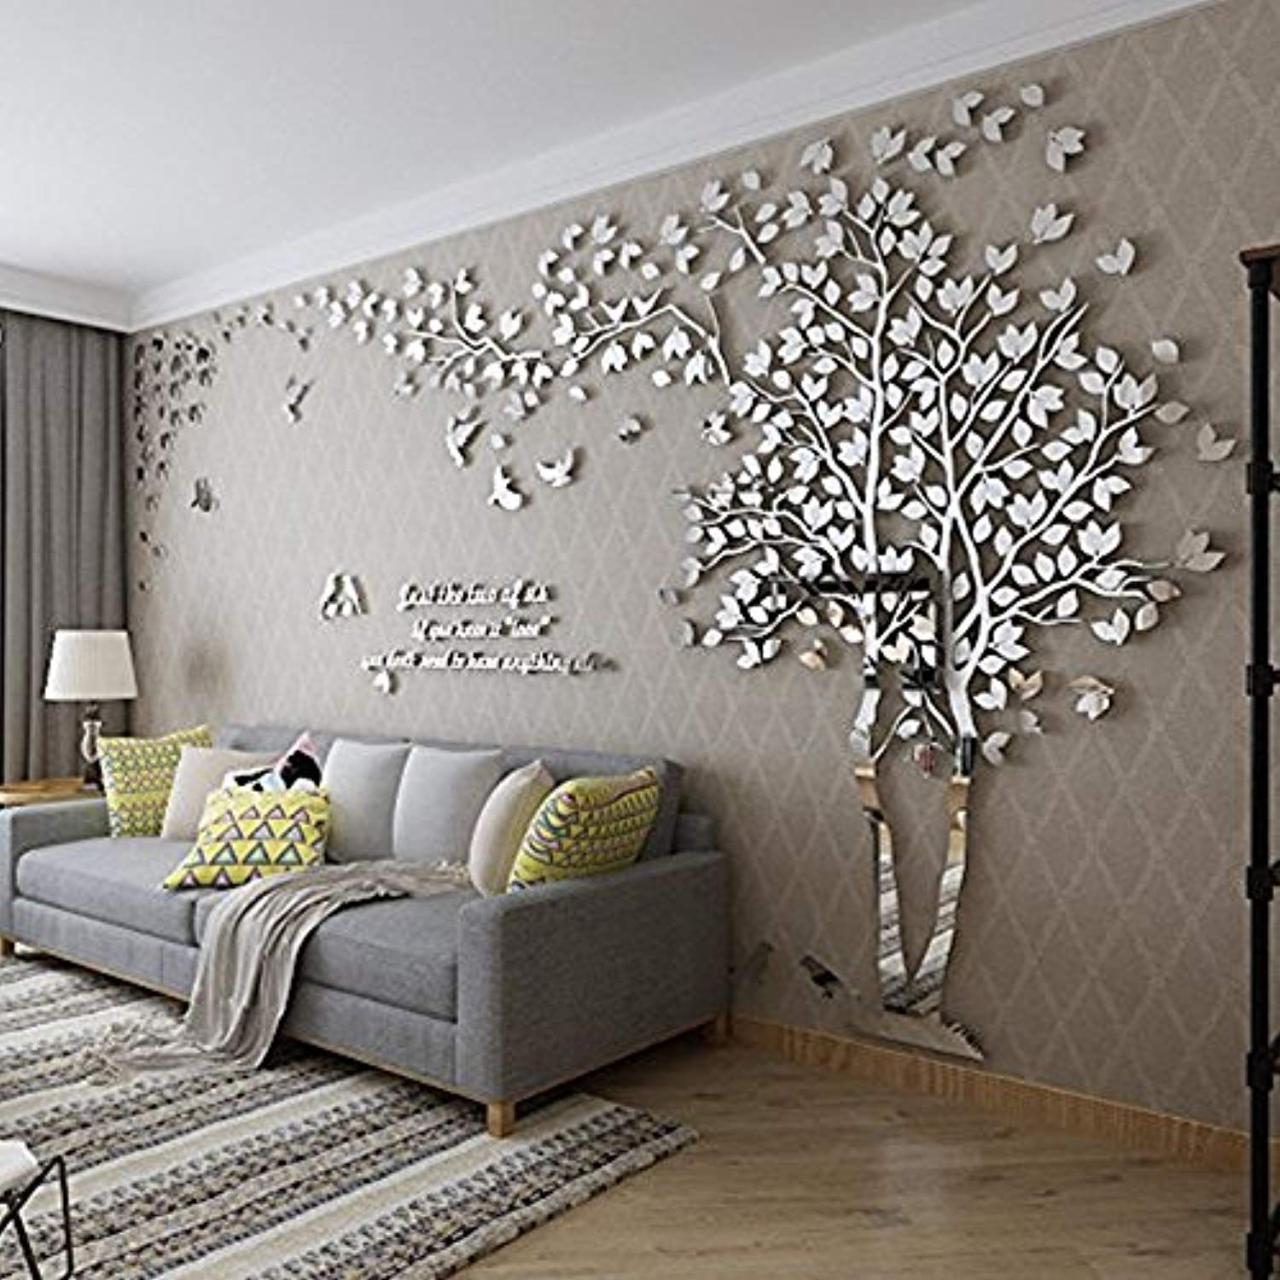 Wall Decor For Living Room Amazon